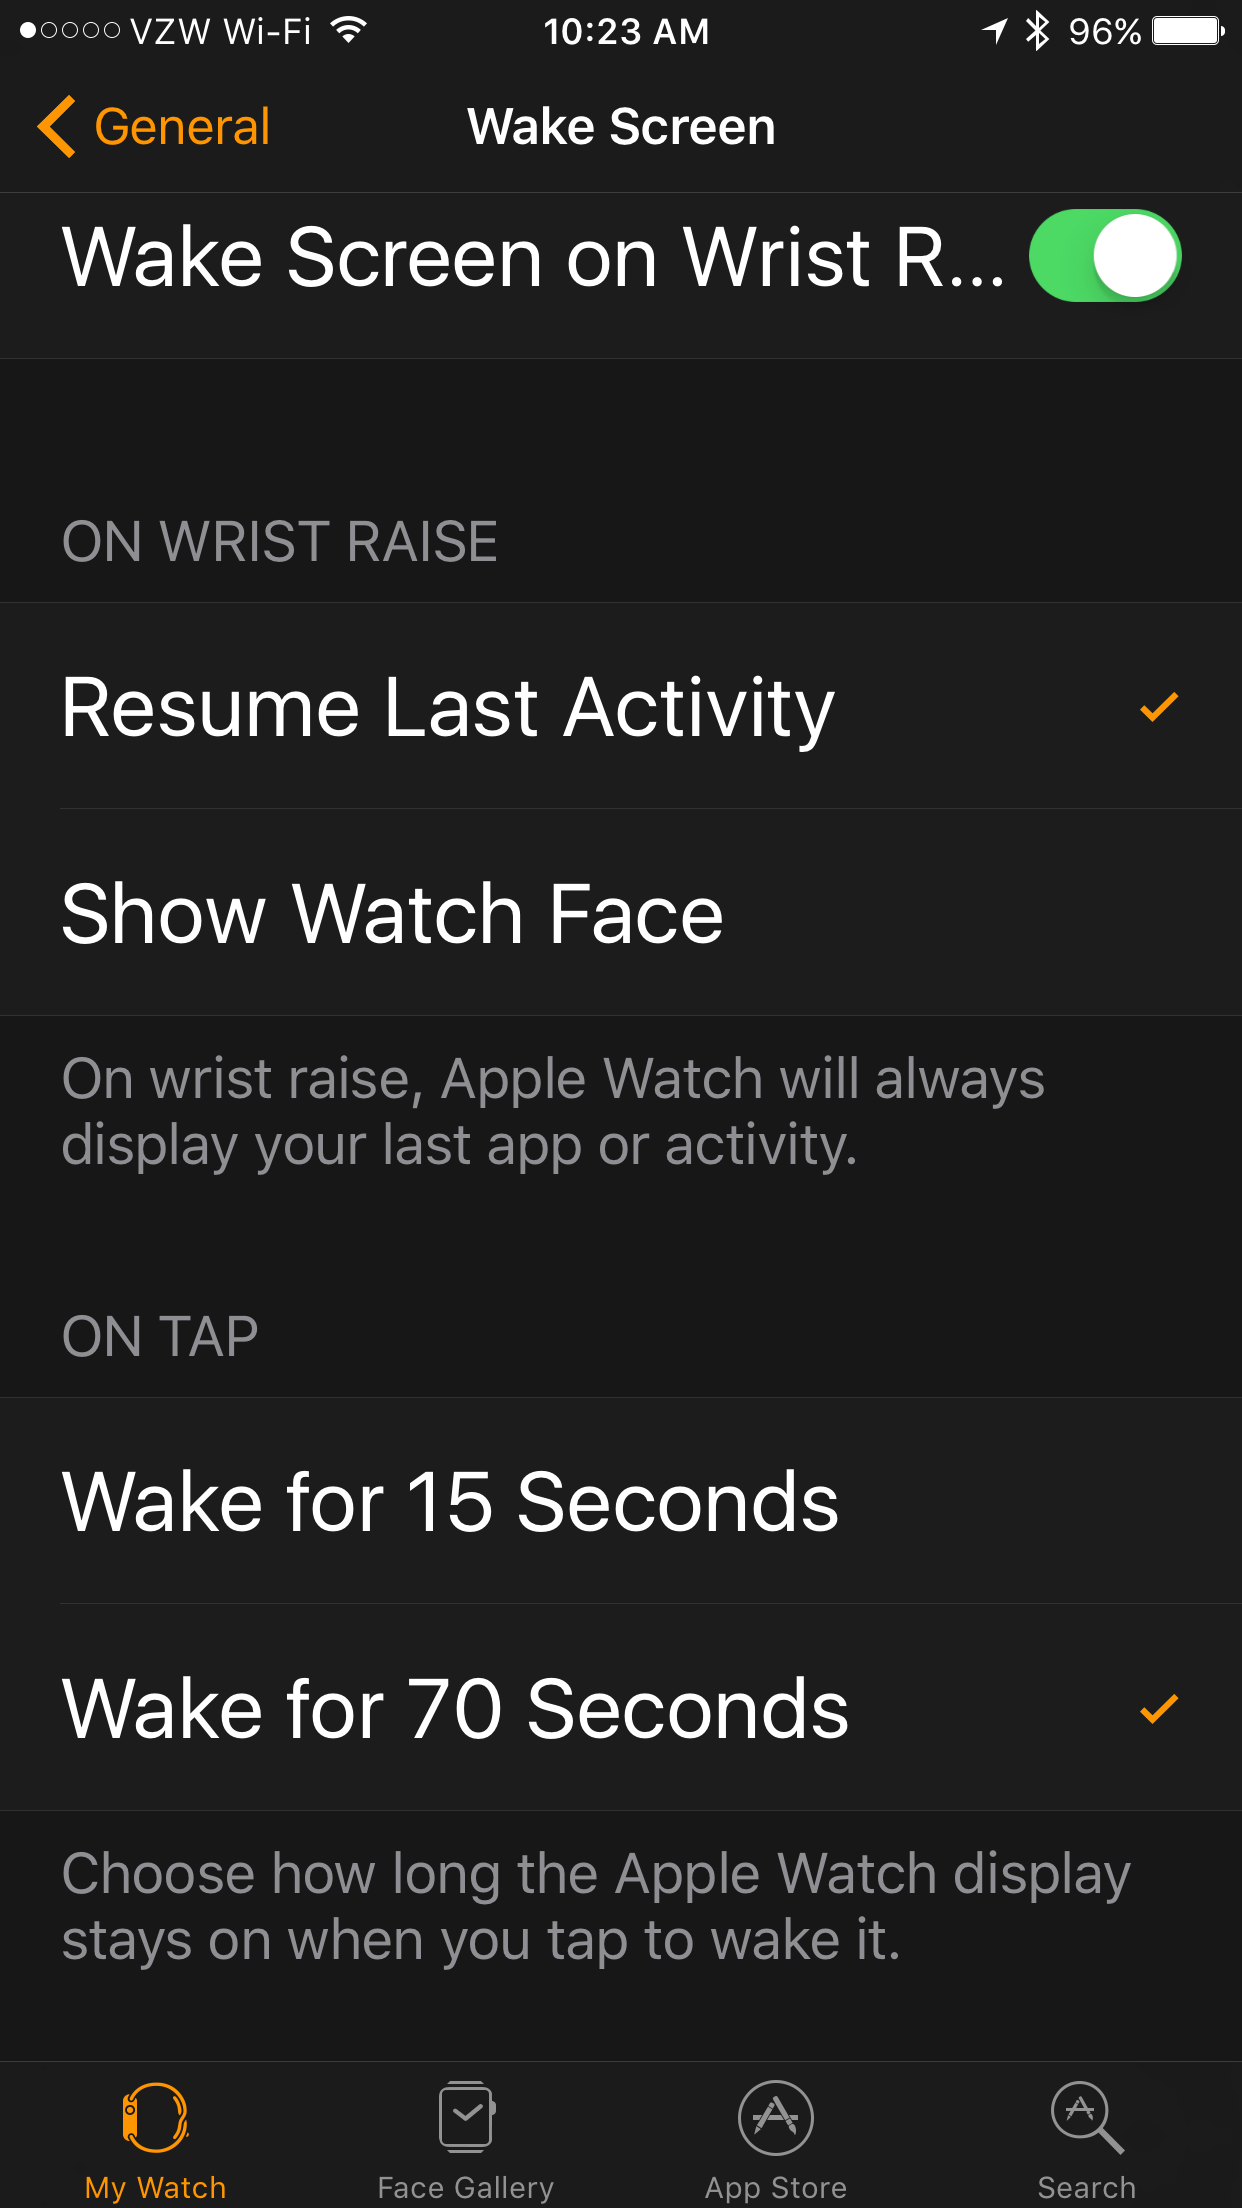 apple watch activity settings